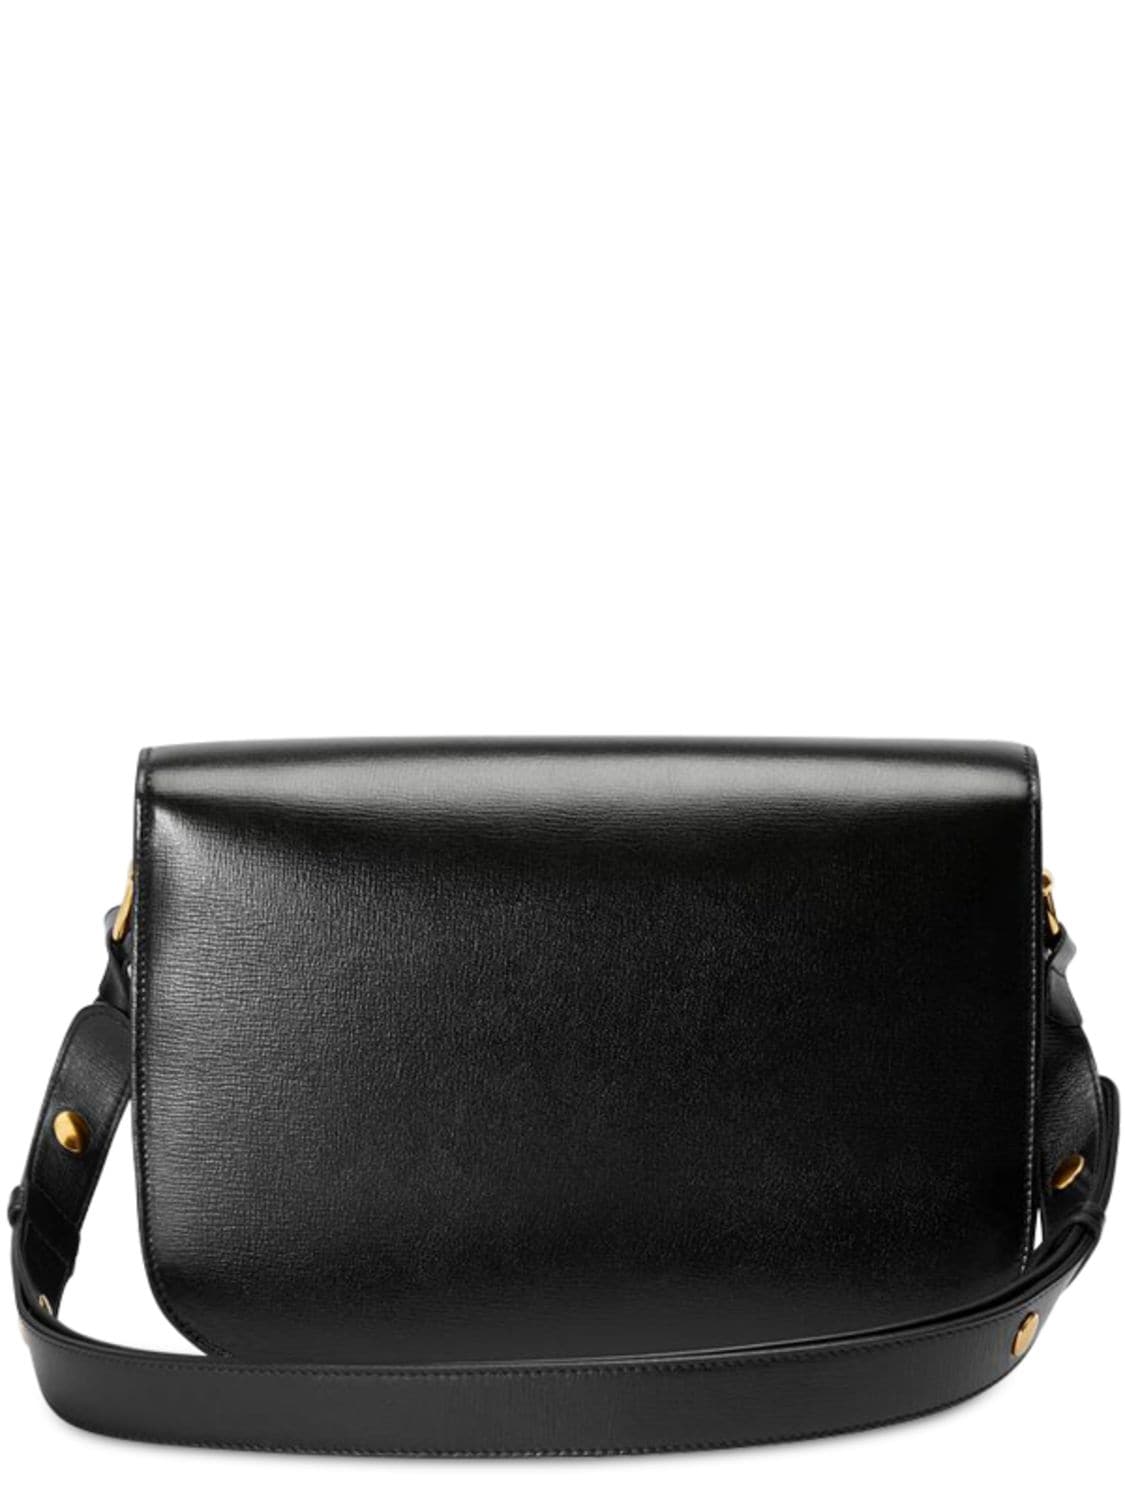 Shop Gucci 1955 Horsebit Leather Bag In Black